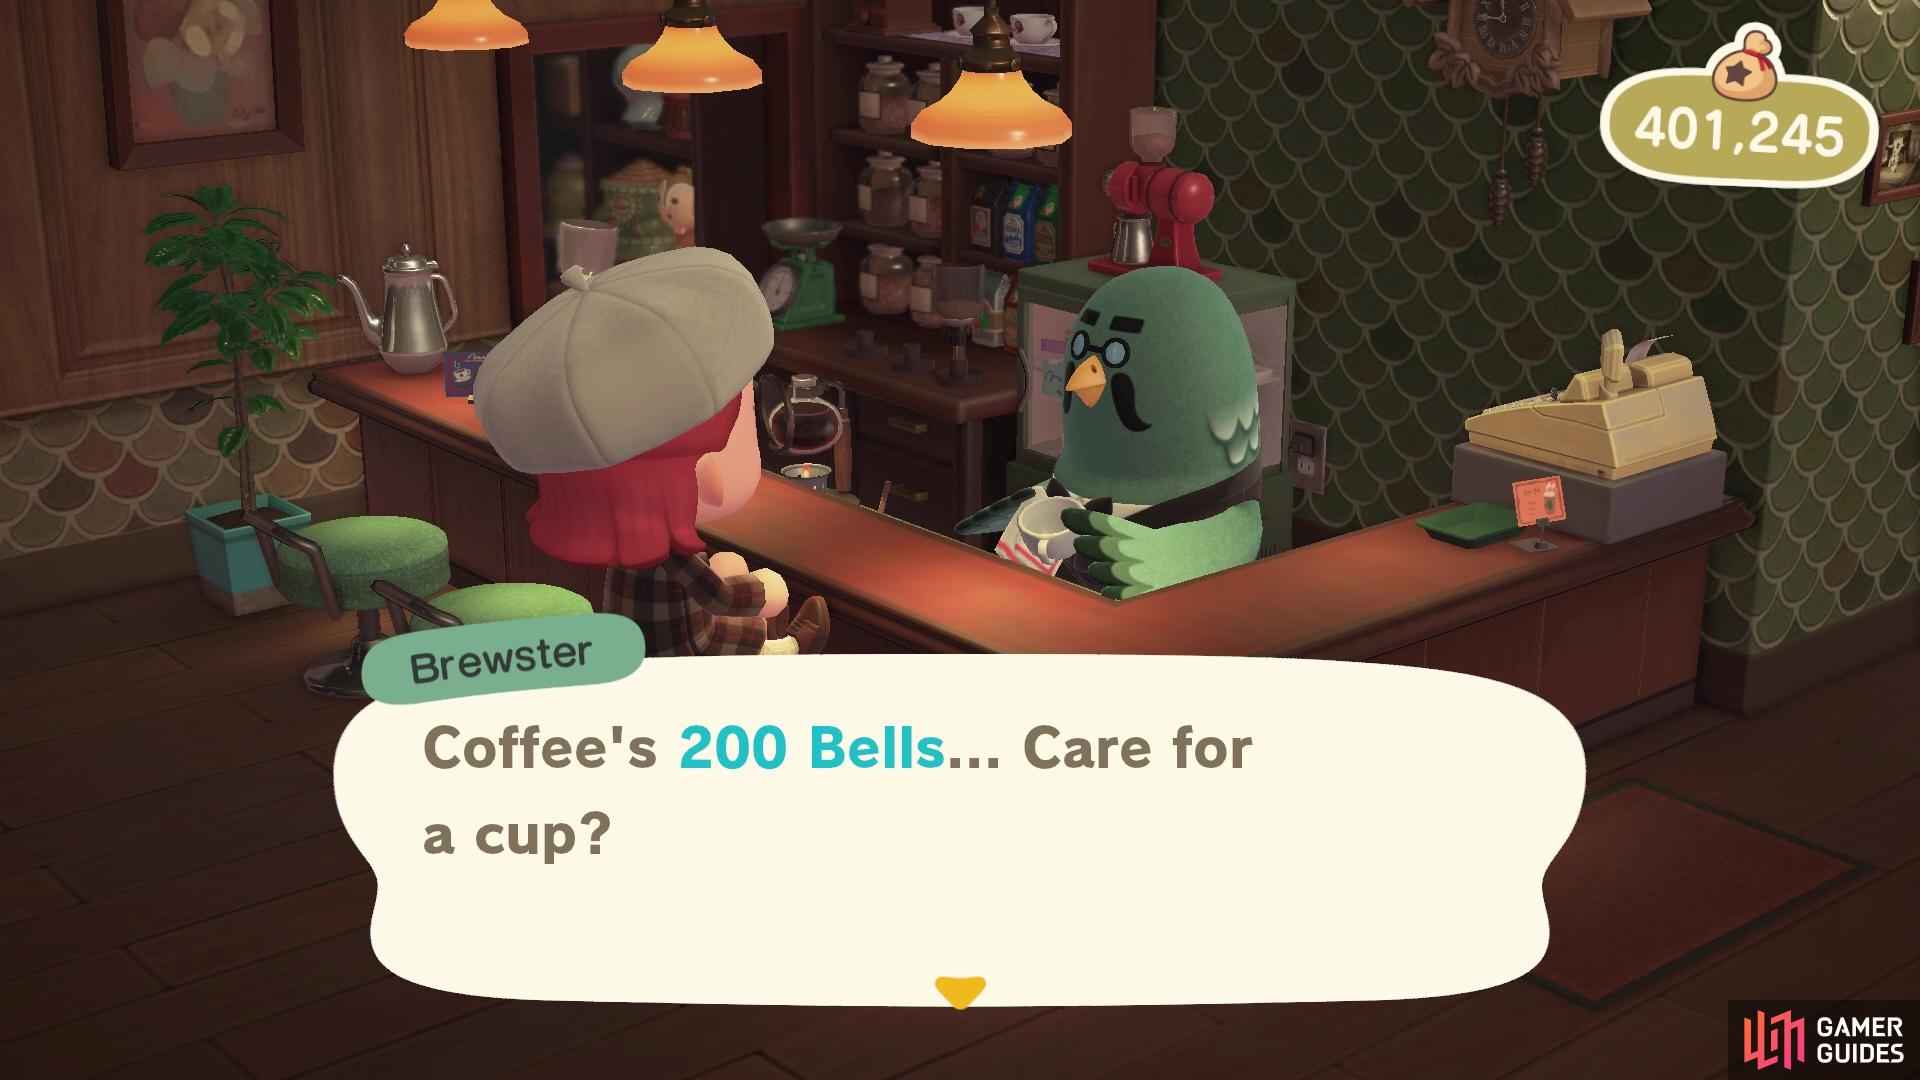 Coffee is 200 Bells per cup.